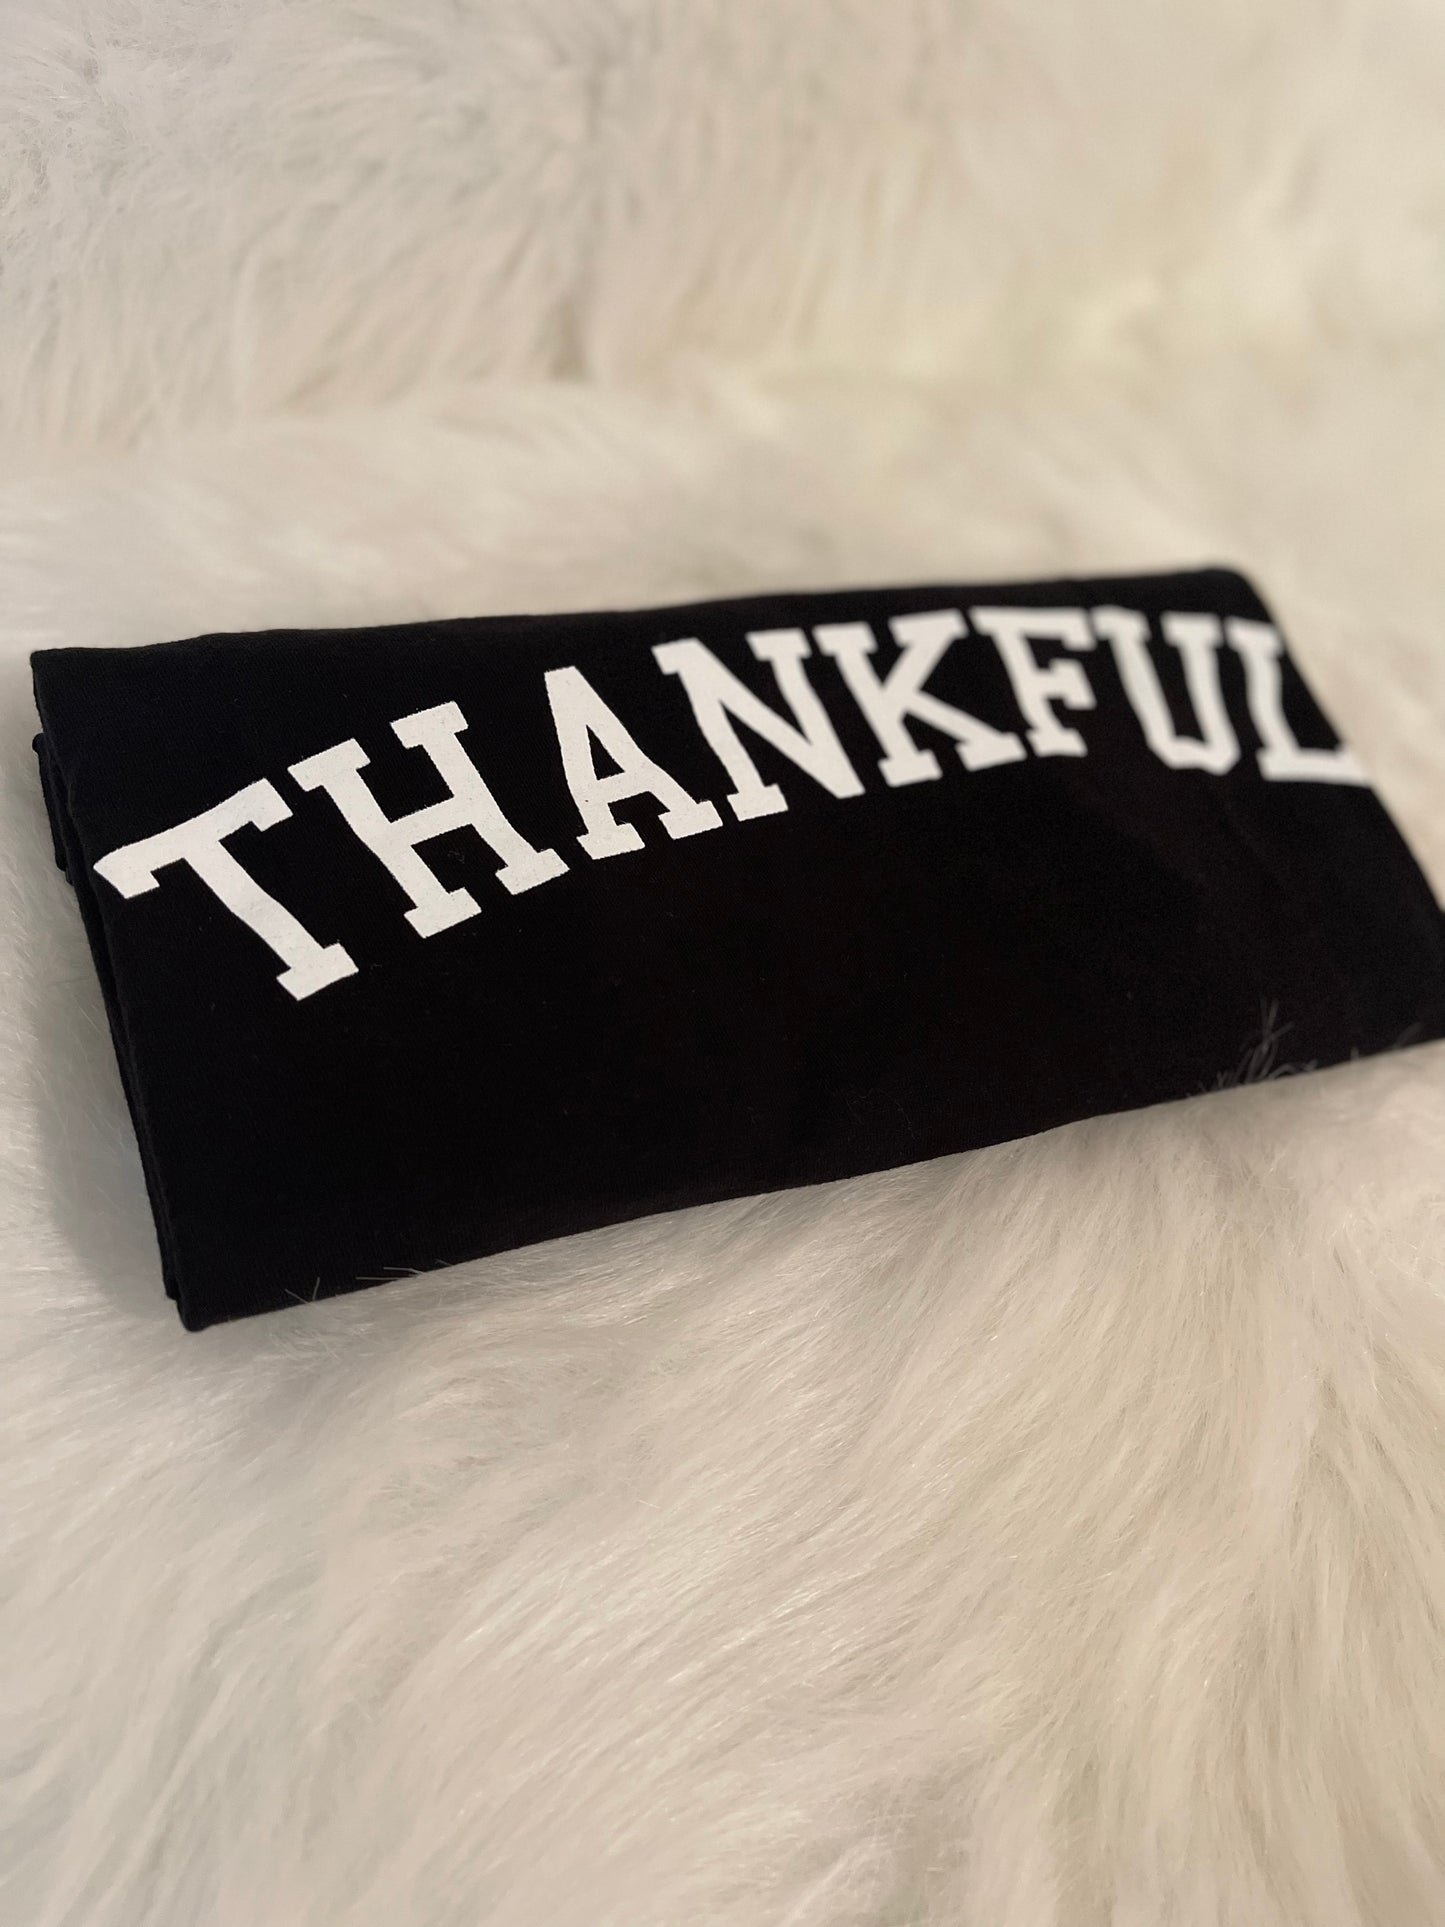 “Thankful”